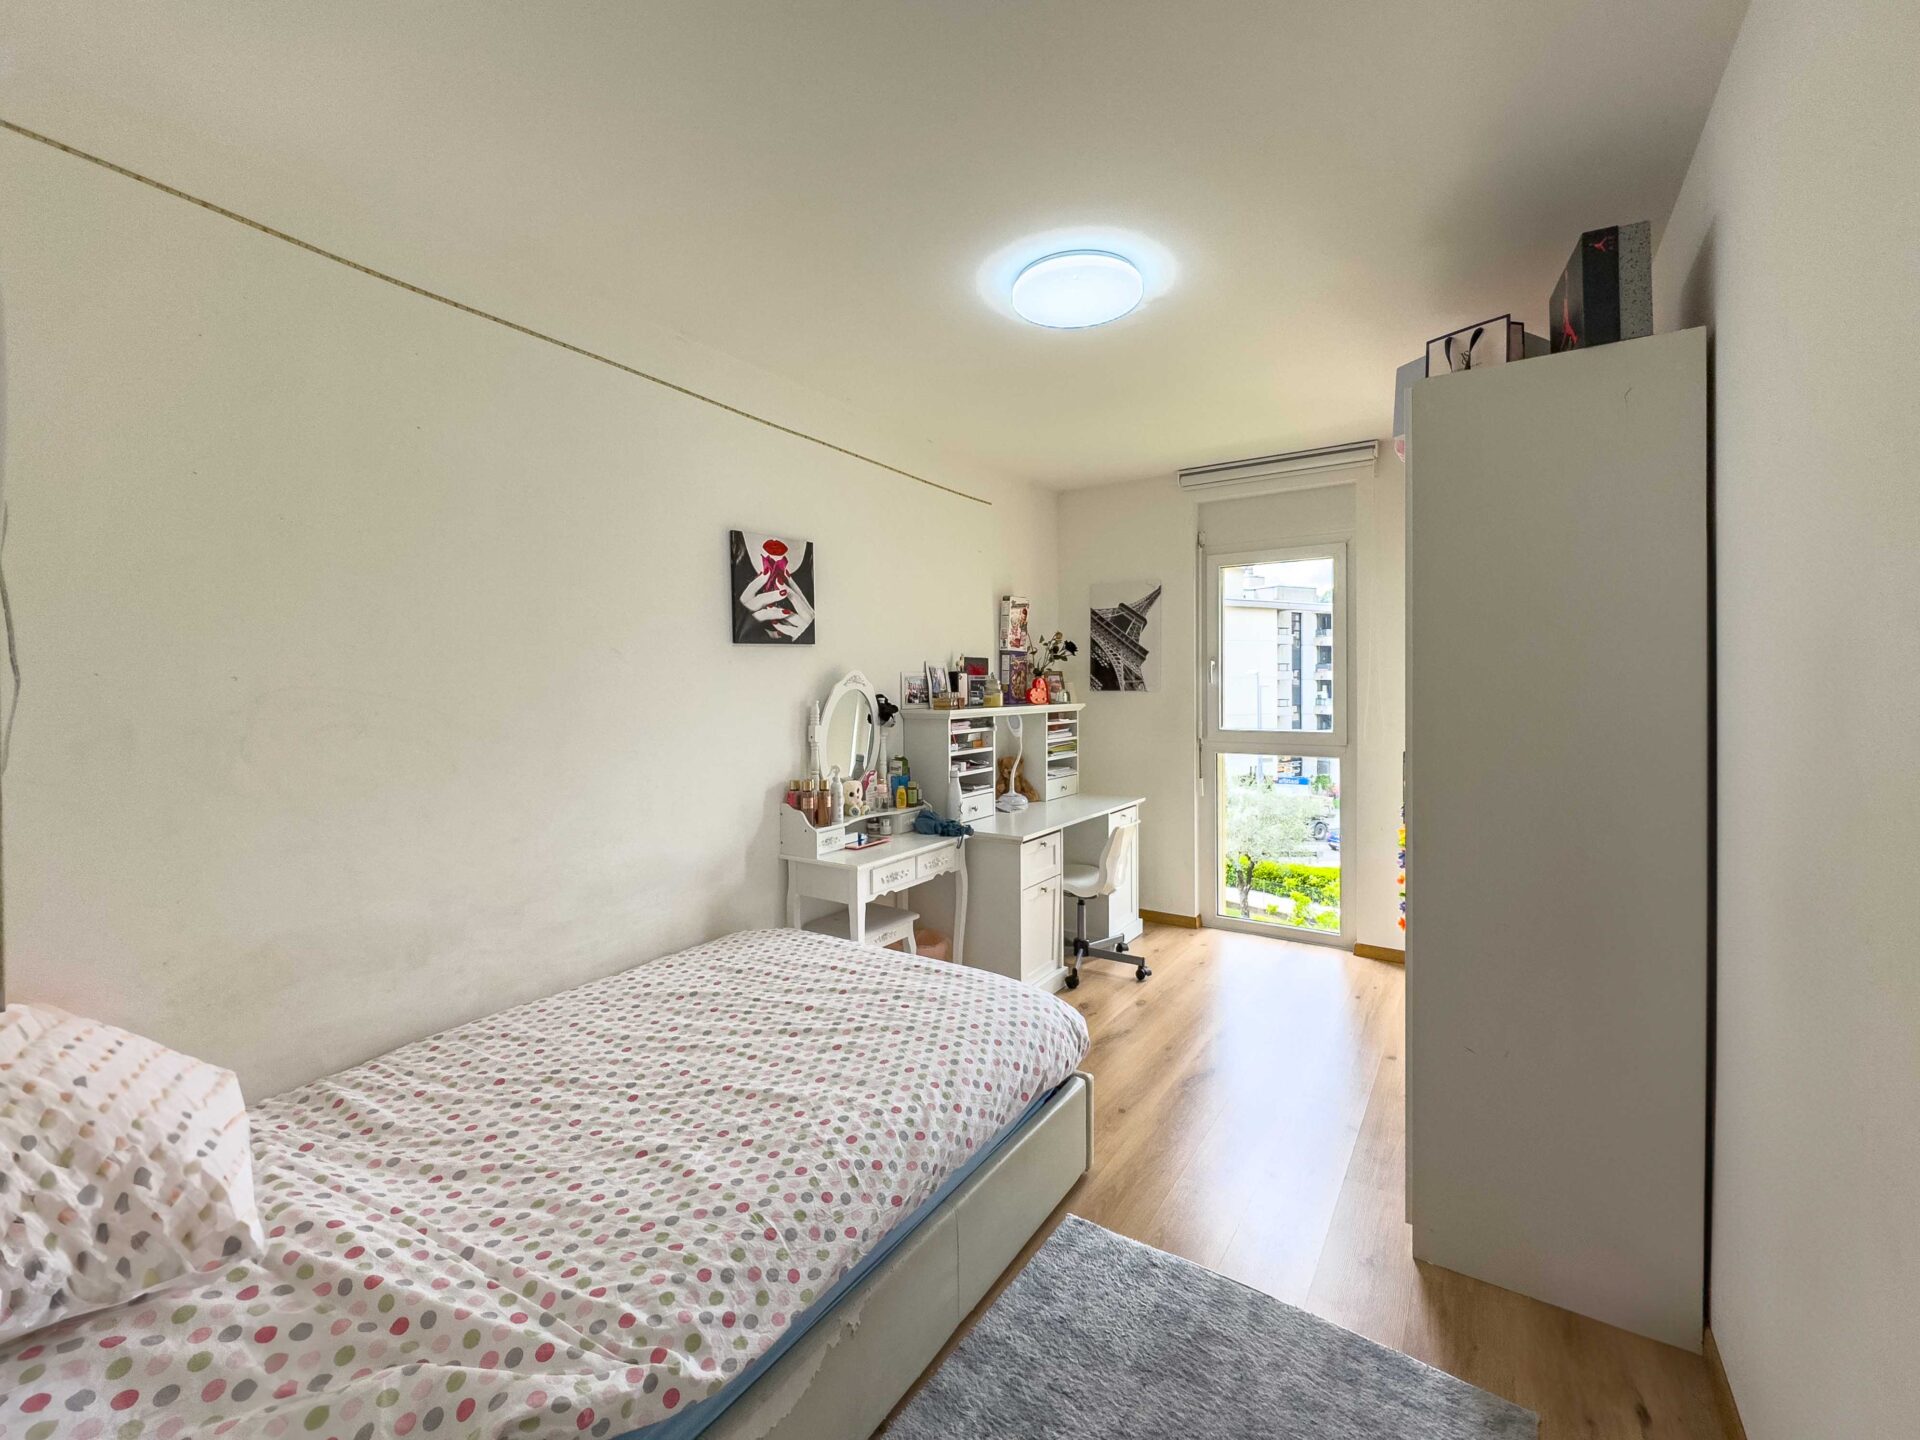 Modern 4.5-room apartment for sale in Pregassona